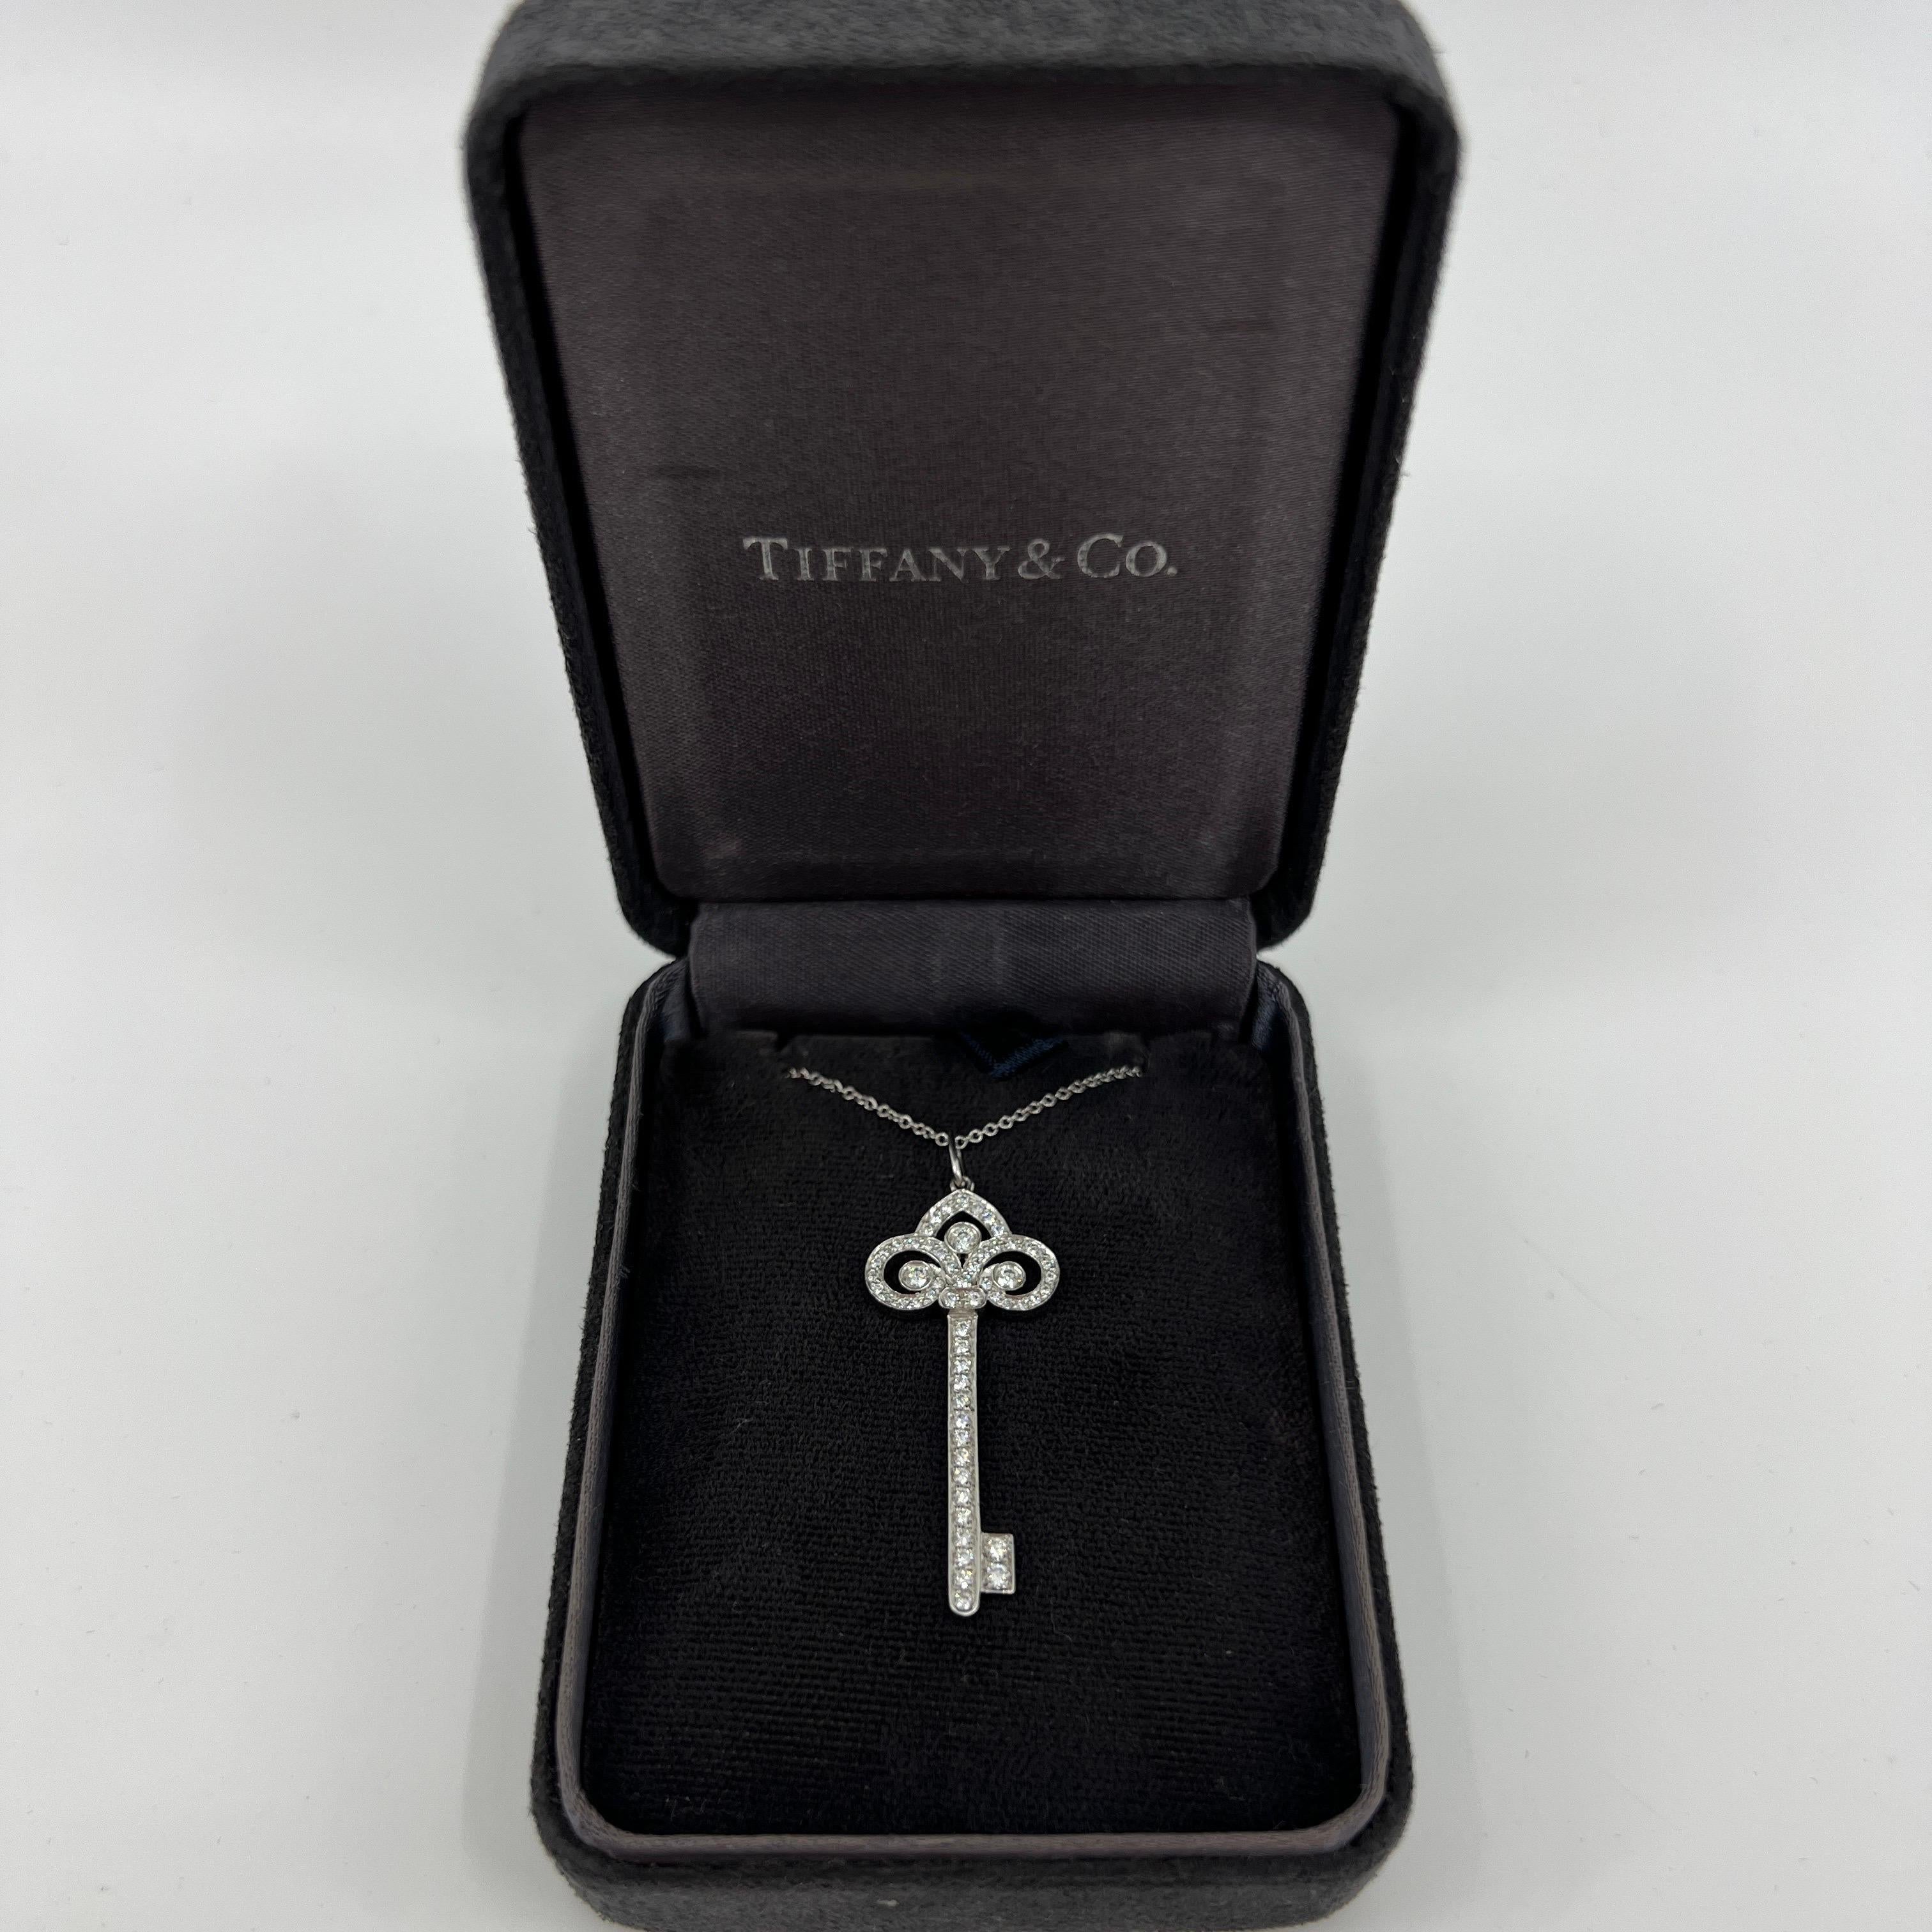 Tiffany & Co. 'Fleur de Lis' Diamond Platinum 1.5 Inch Key Pendant Necklace.

A beautiful and rare authentic Tiffany Key Pendant designed in the Fleur-De-Lis style. Tiffany keys are 'radiant symbols of a bright future, representing brilliant beacons